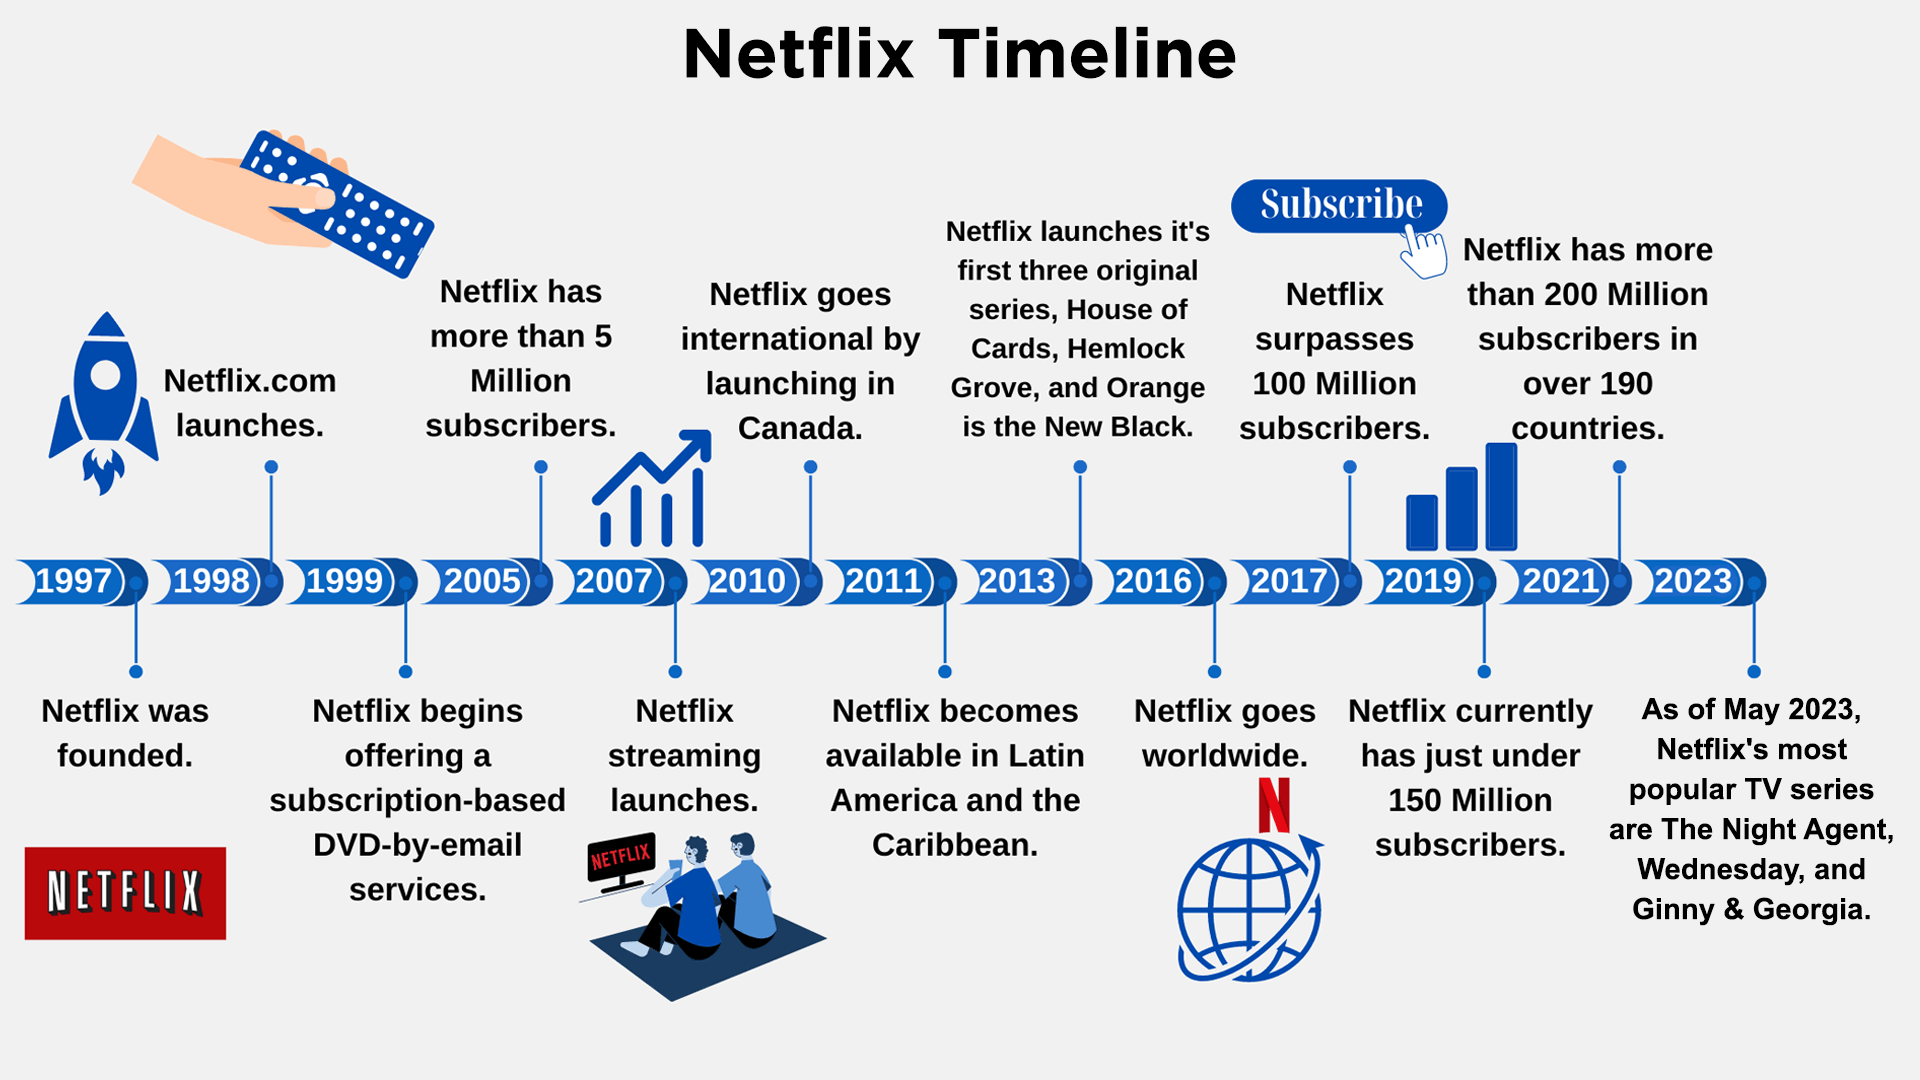 The History of Netflix- Founding, Model, Timeline, Milestones